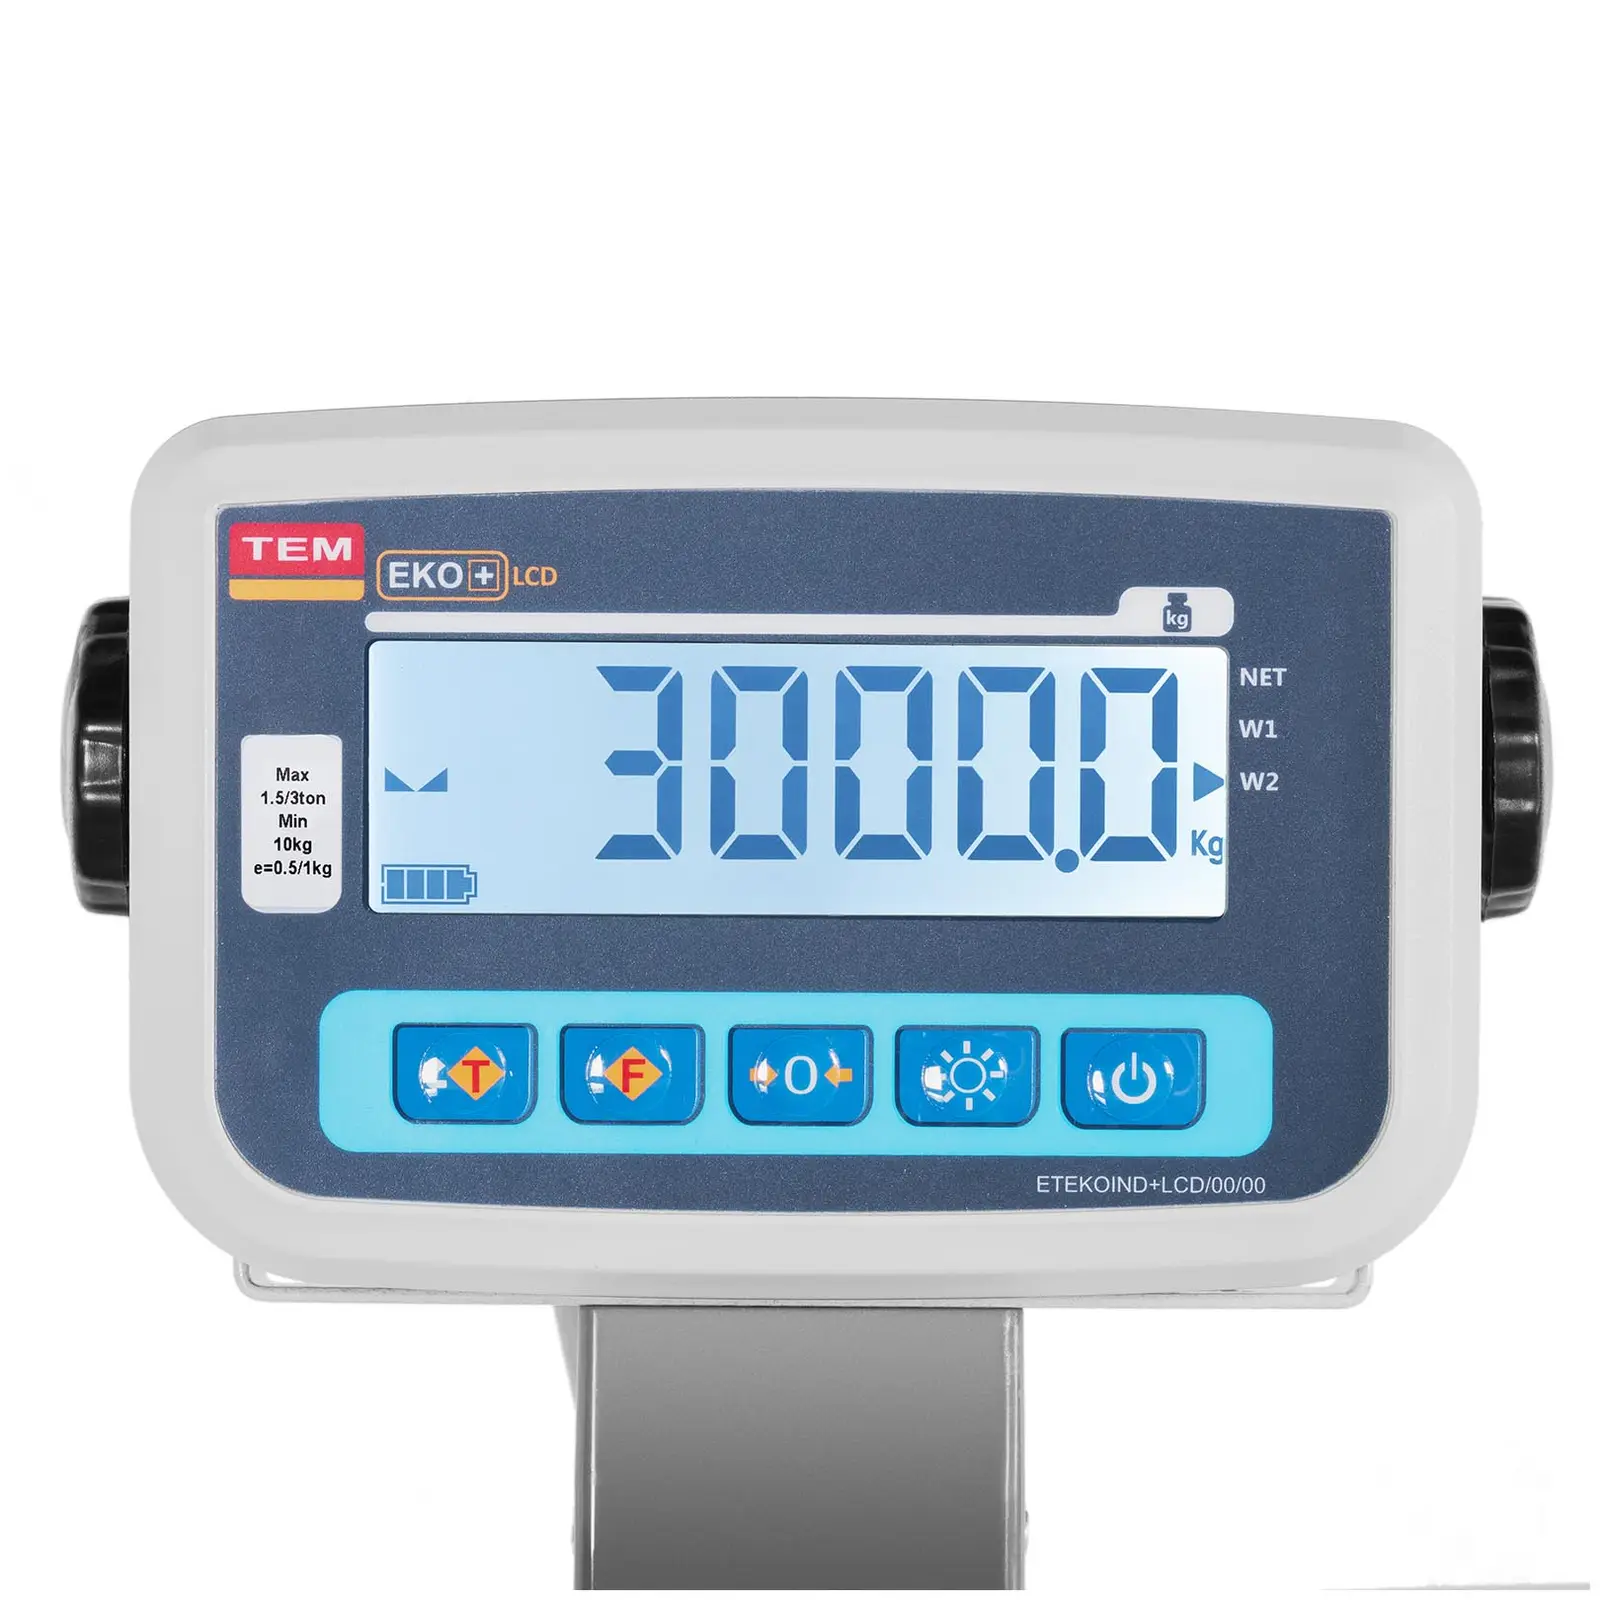 Eläinvaaka - varmennettu - 500 g (0 - 1 500 kg) / 1 kg (1 500 - 3 000 kg) - eläinystävällinen häkki - LCD